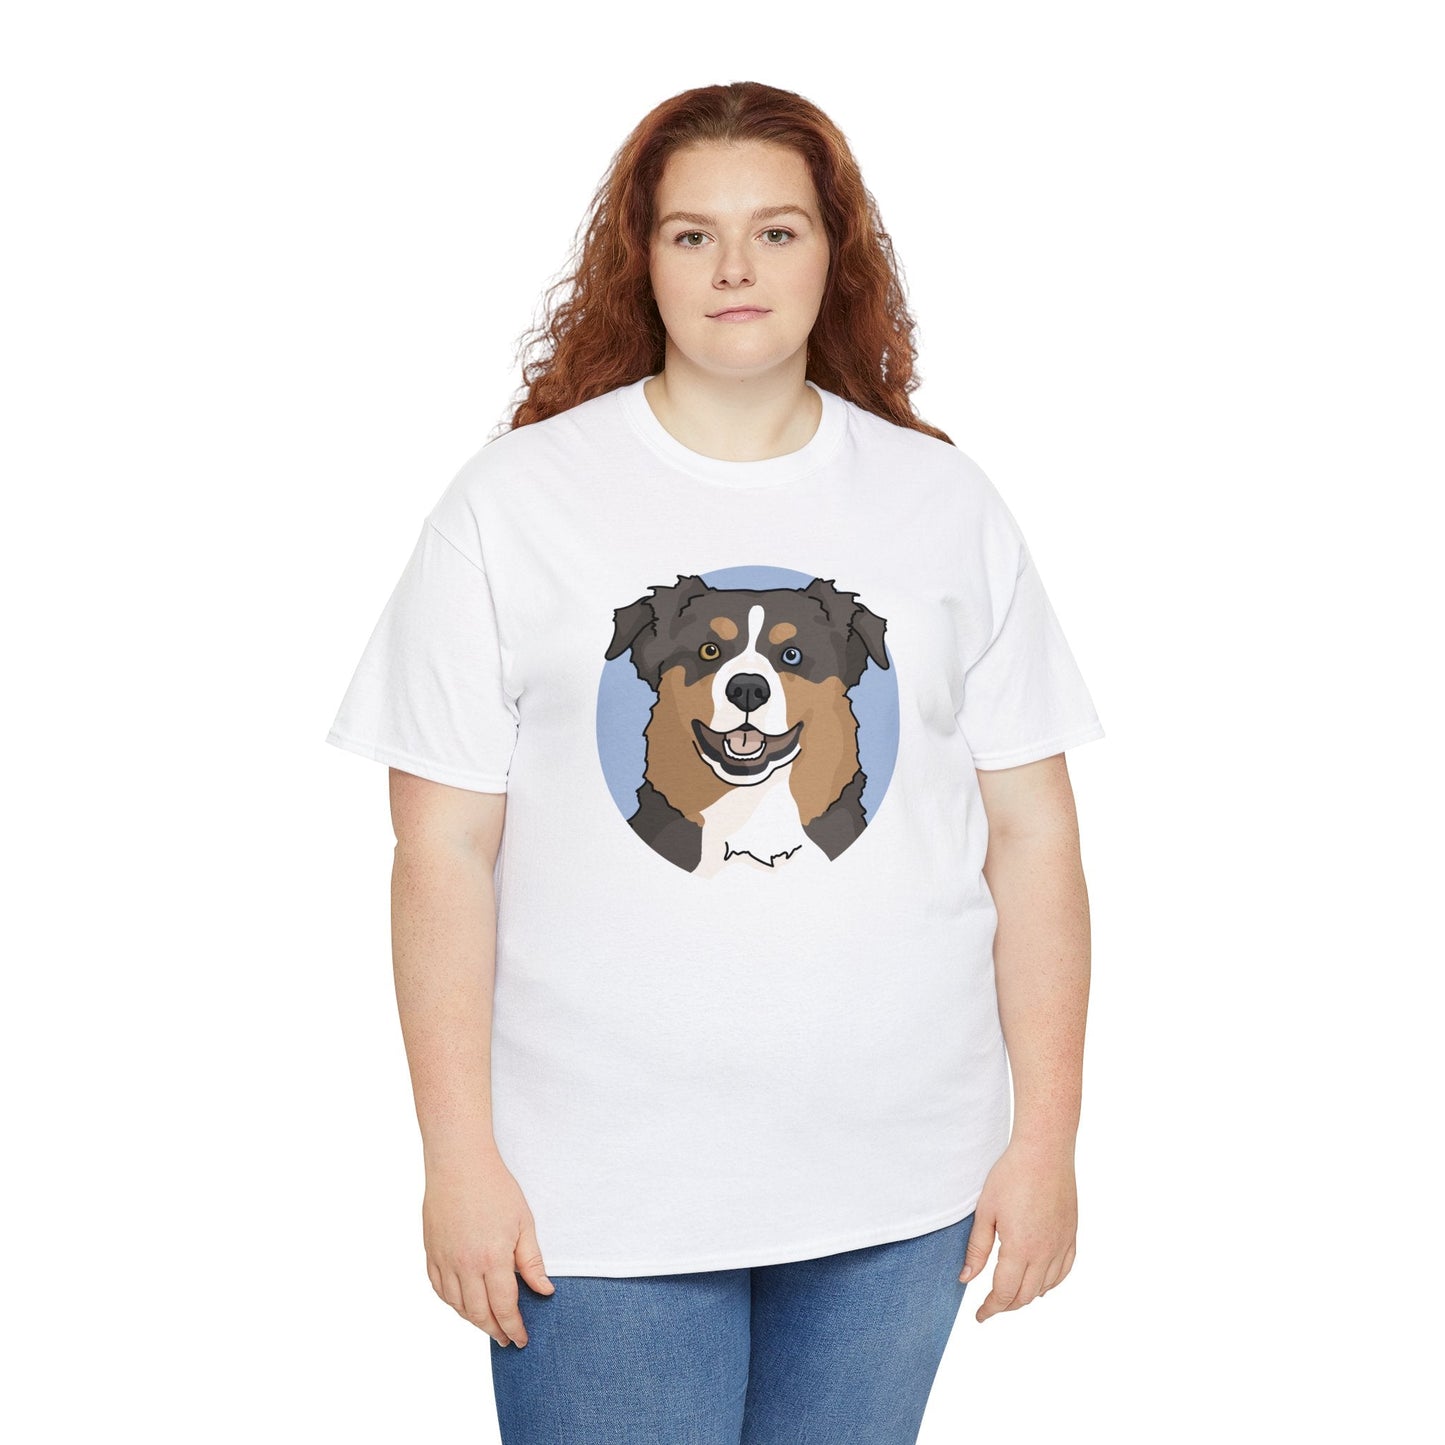 Australian Shepherd | T-shirt - Detezi Designs-25377956598565584333